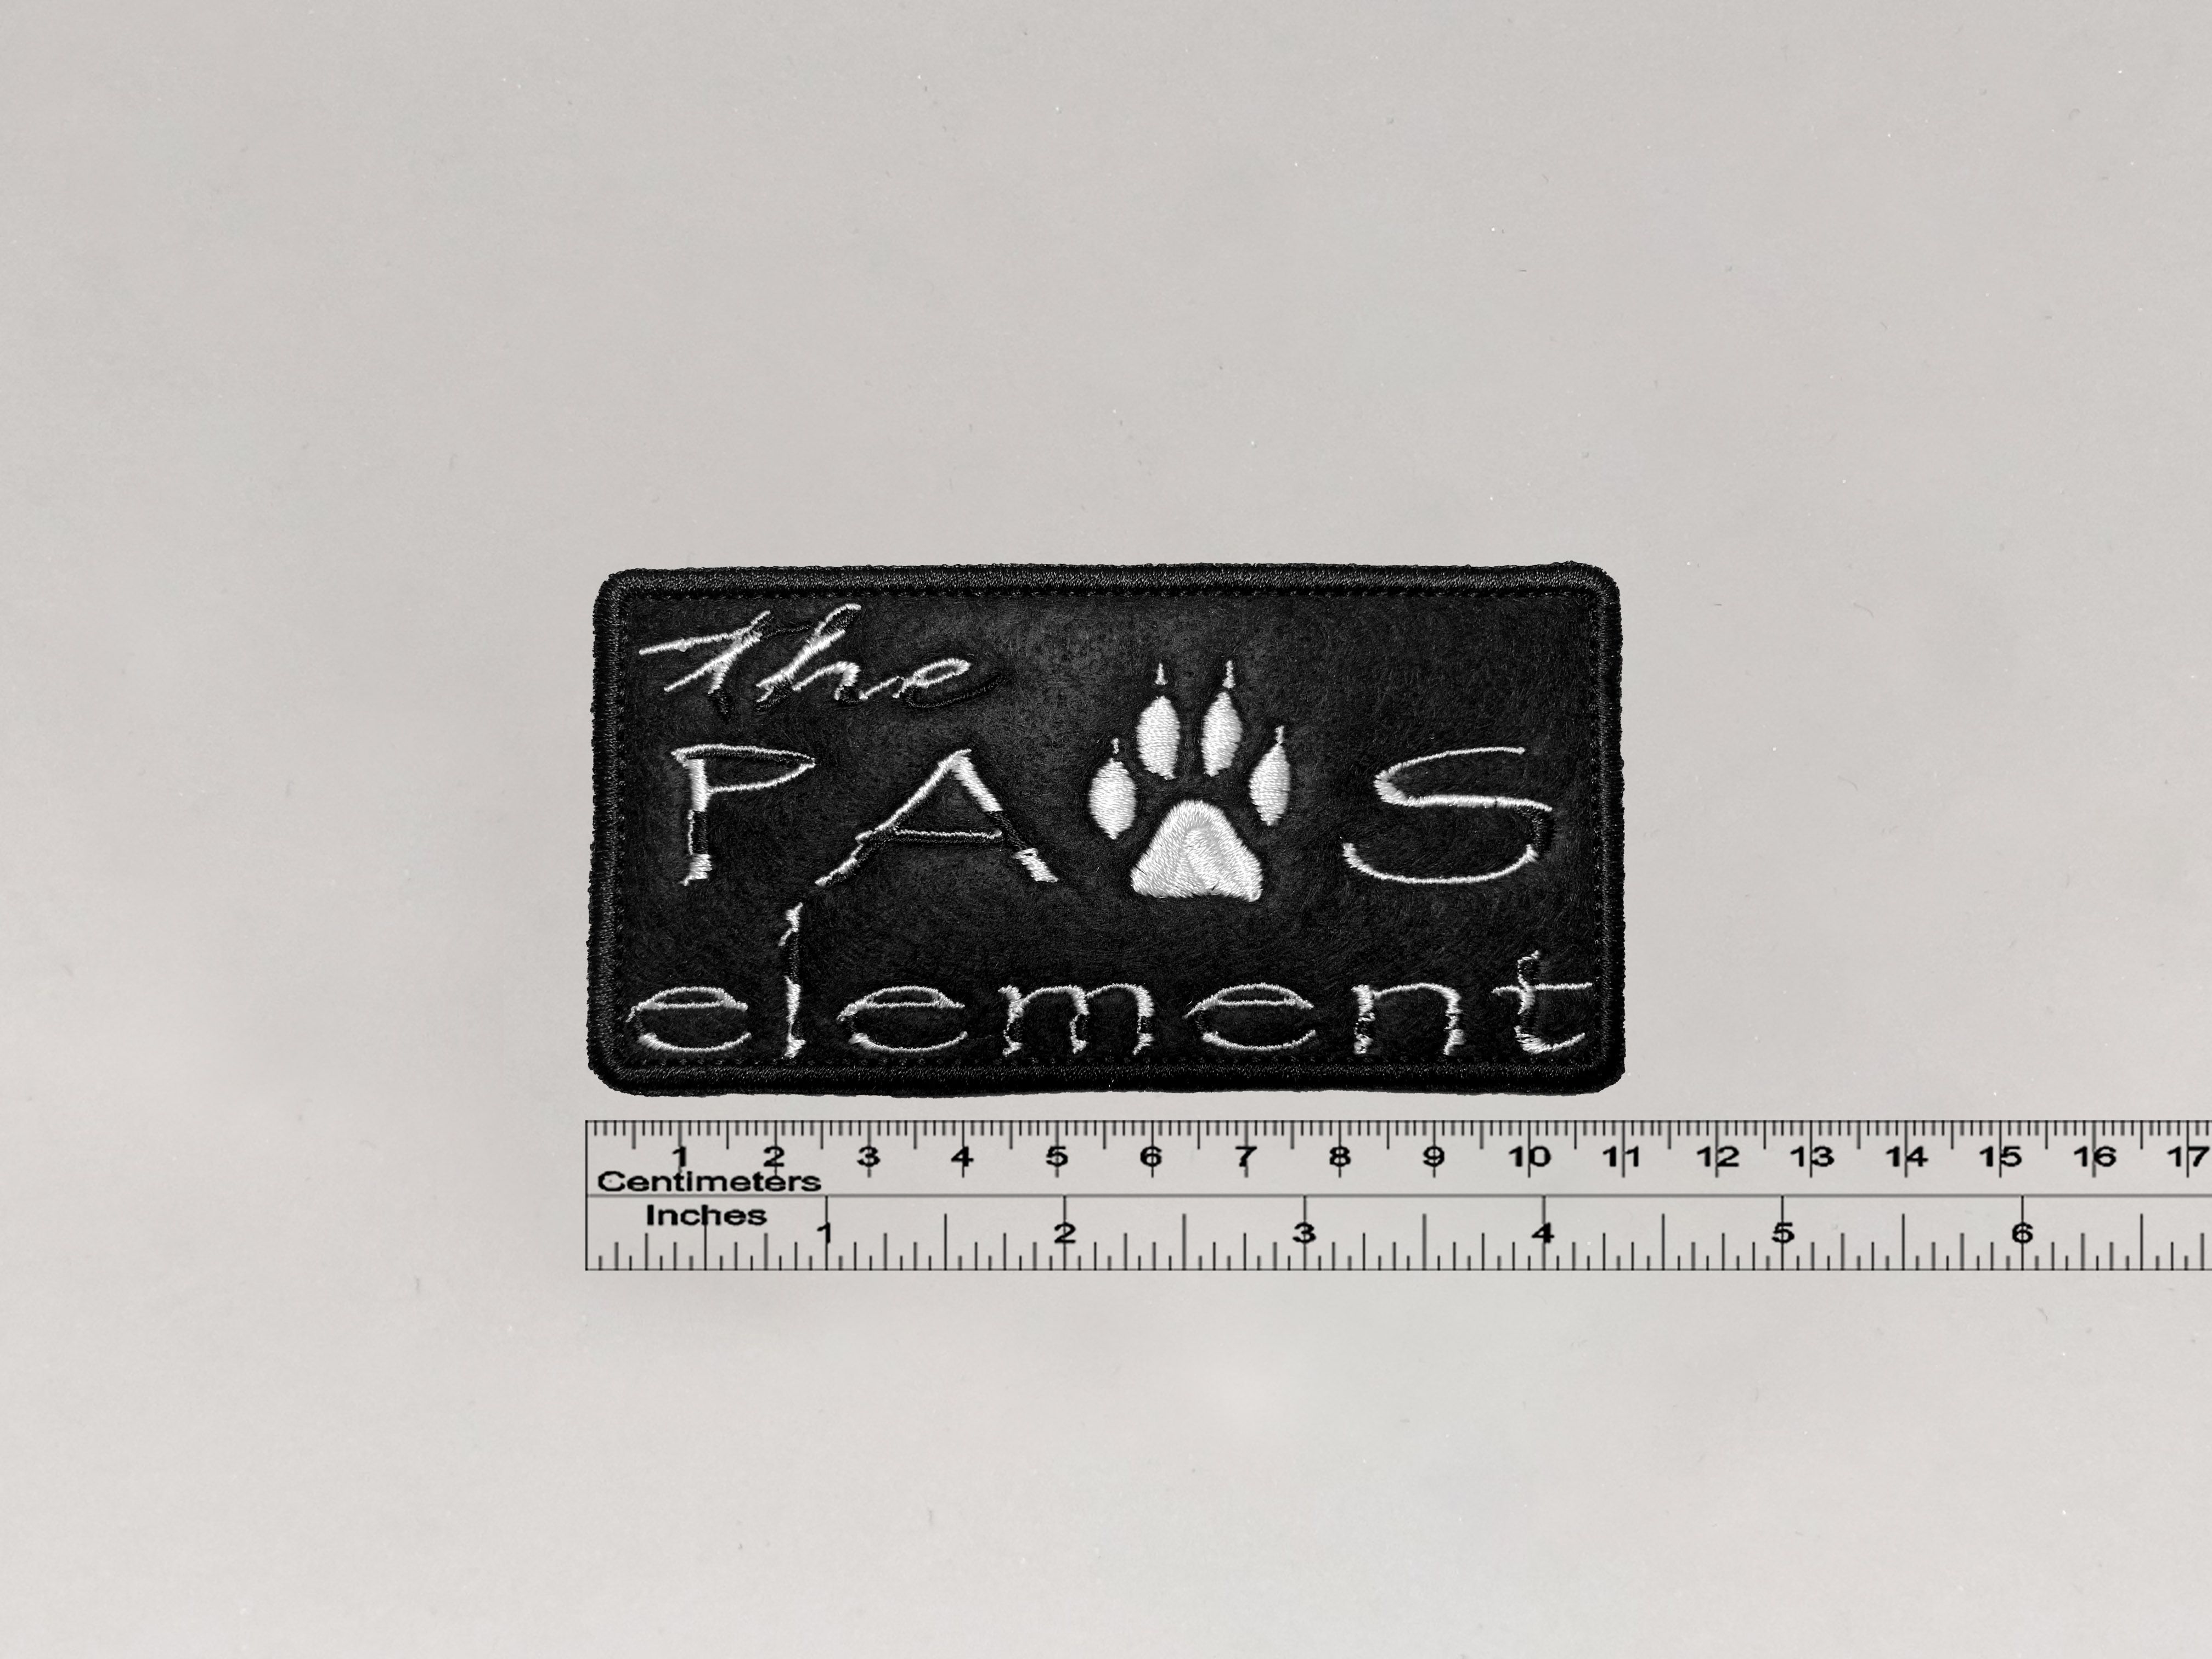 The paw's element. The Paws element. The Paws element картинки.